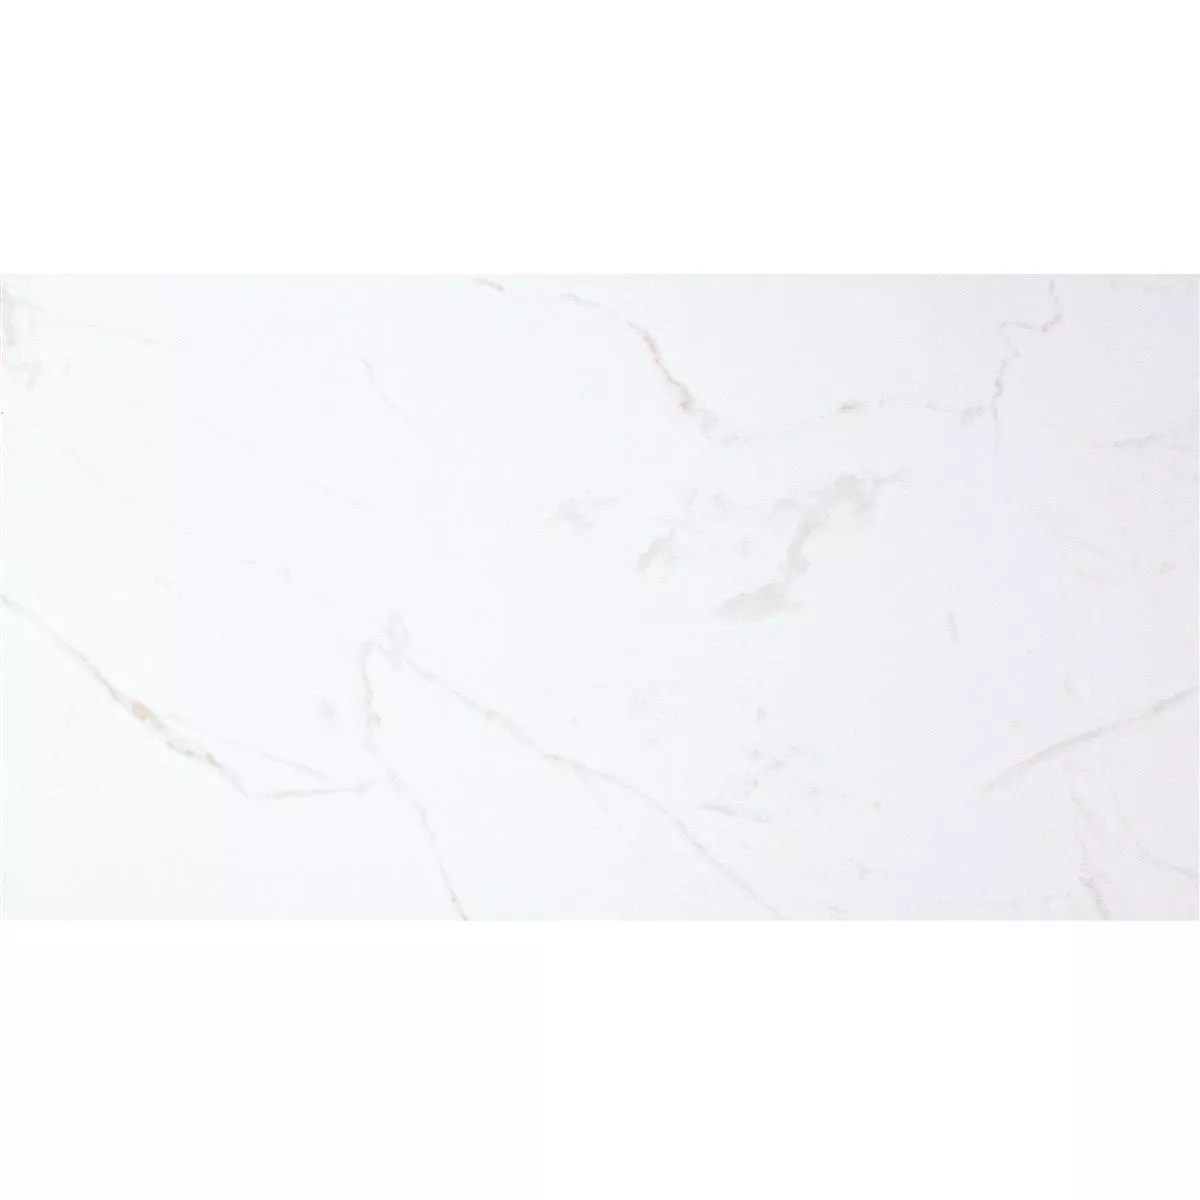 Vzorek Nástěnné Obklady Bradfort Mramorový Vzhled Bílá Rektifikováné Matný 30x60cm